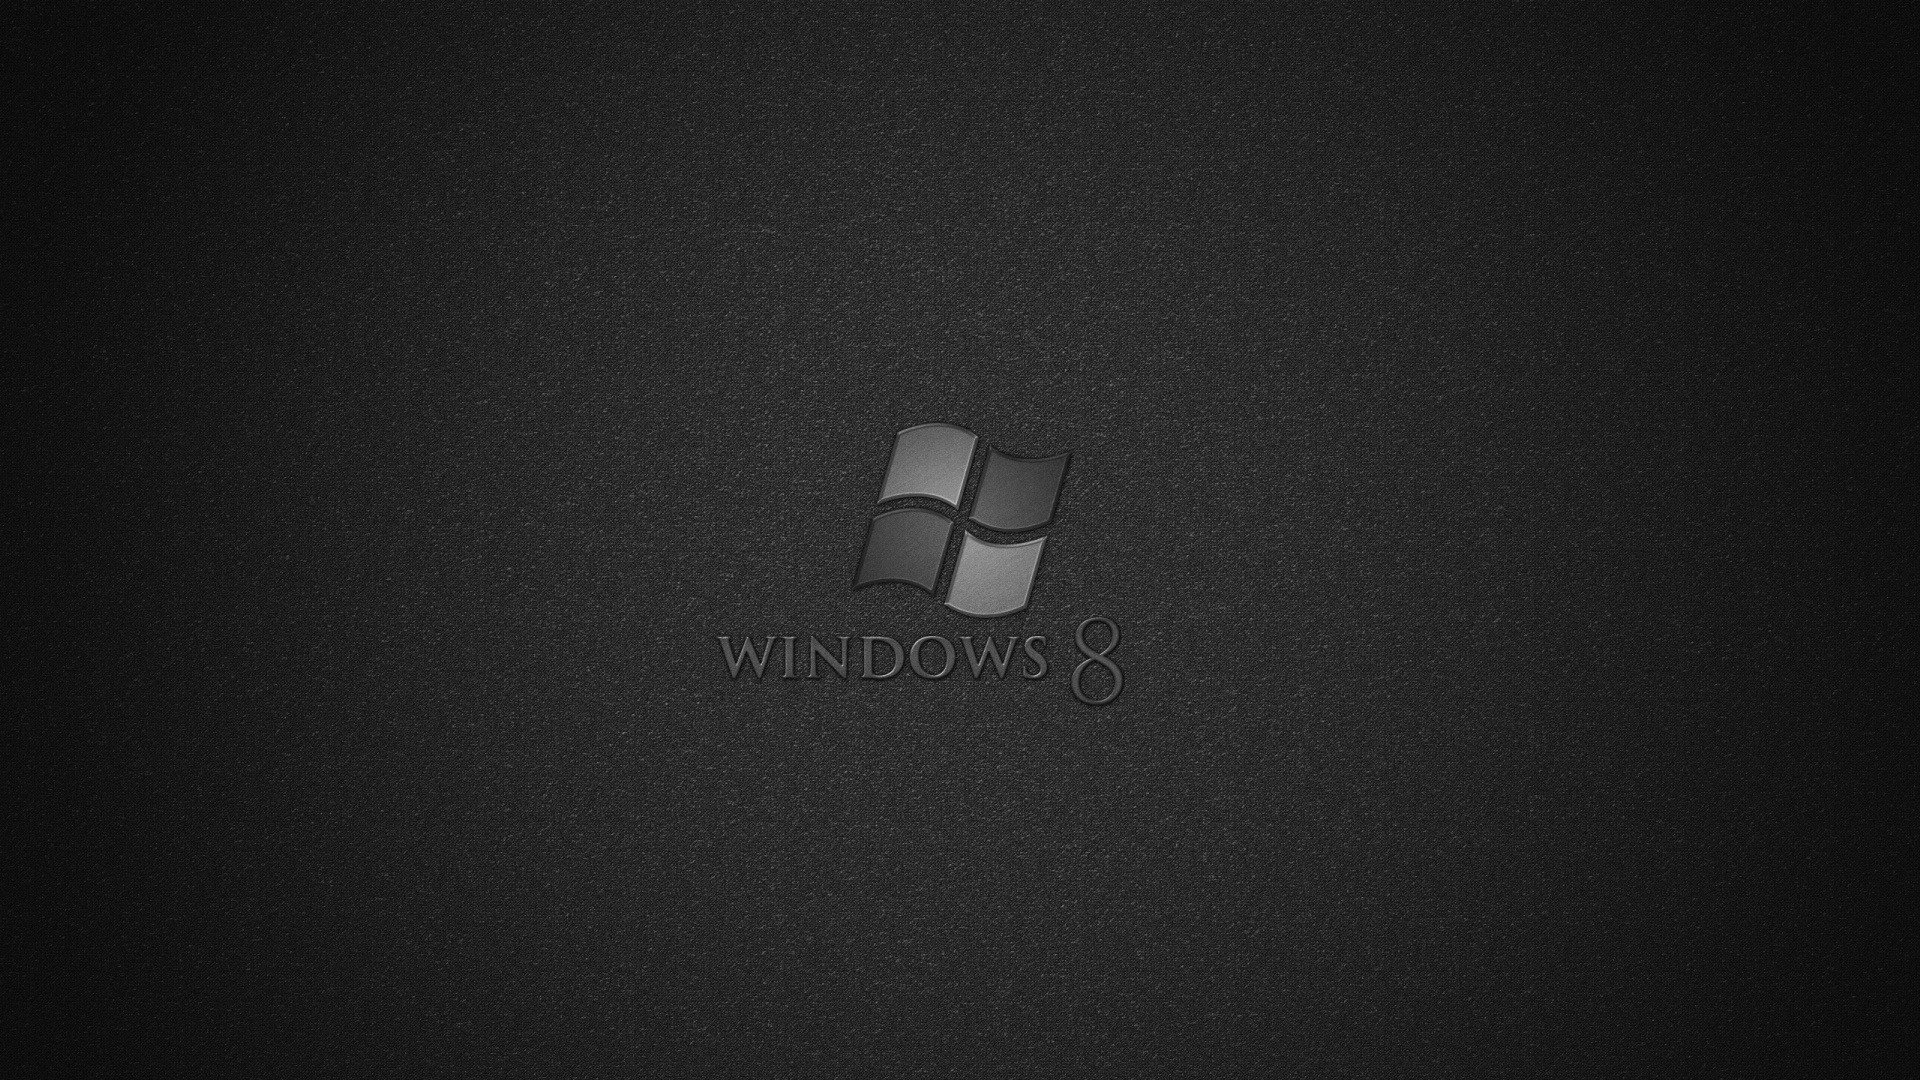 [44+] HD Windows 10 Logo Wallpapers on WallpaperSafari Full Hd Wallpapers For Windows 8 1920x1080